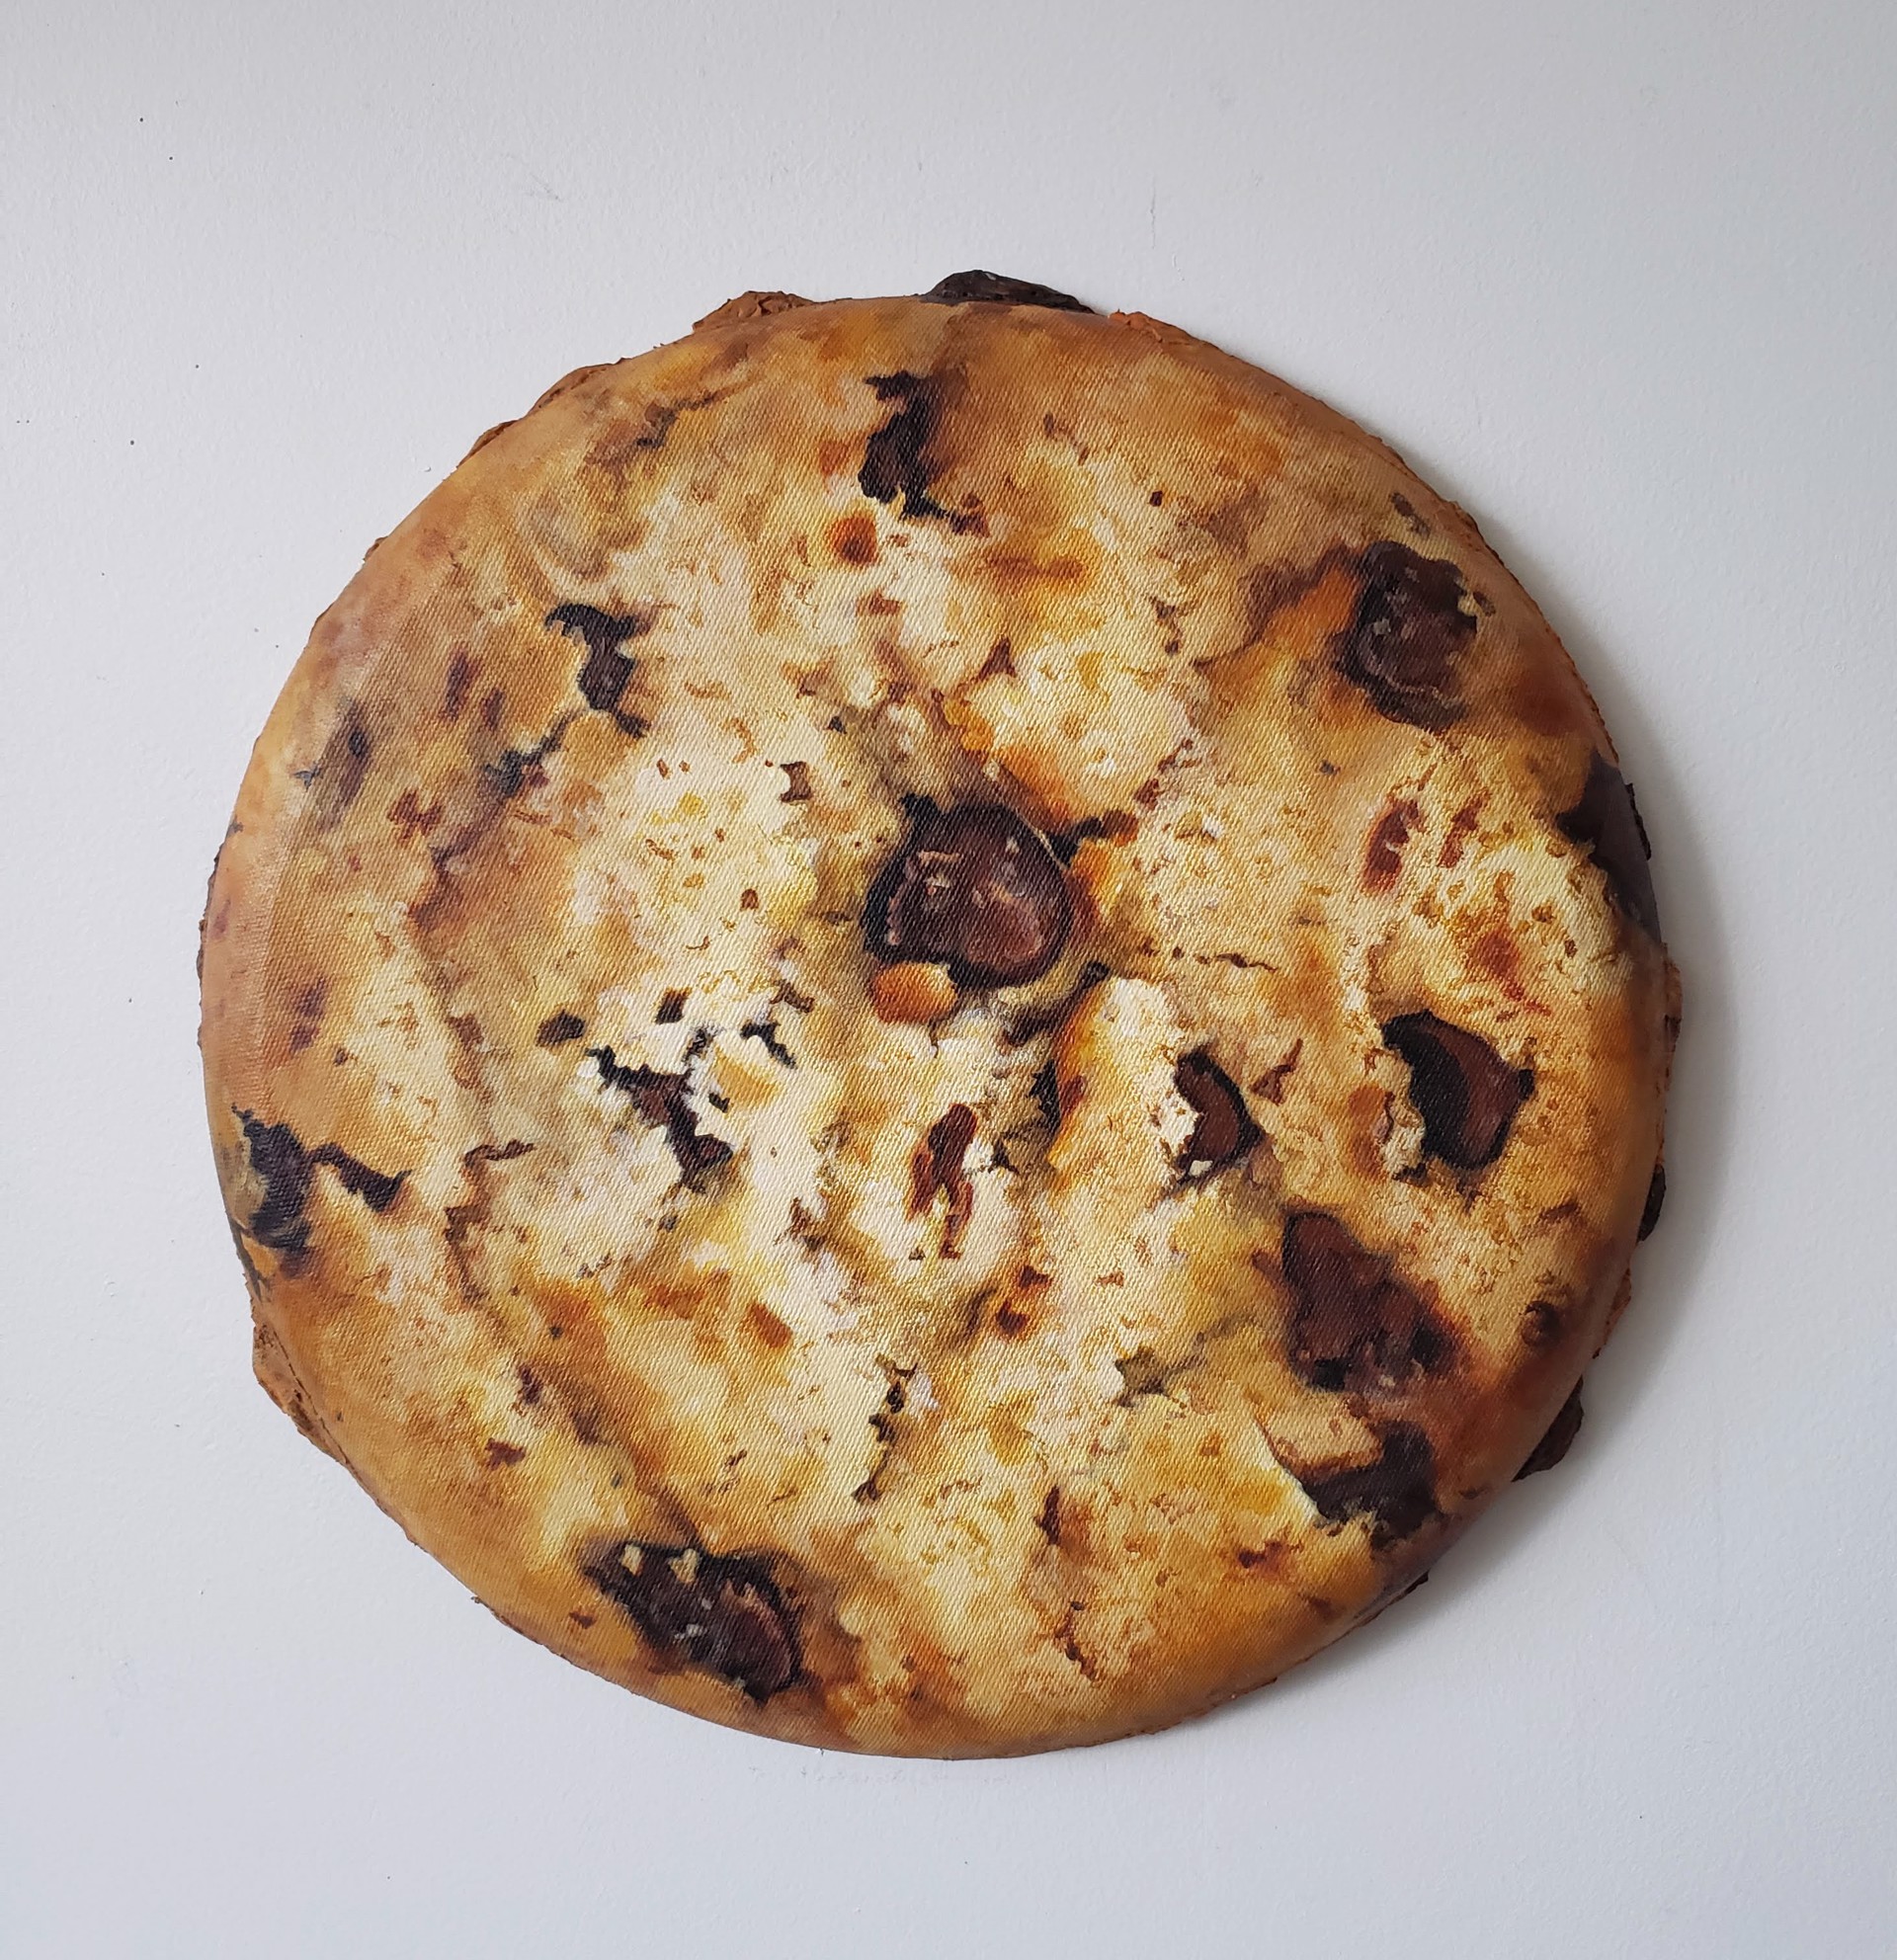 Chocolate Chip Cookie by Katie Koenig